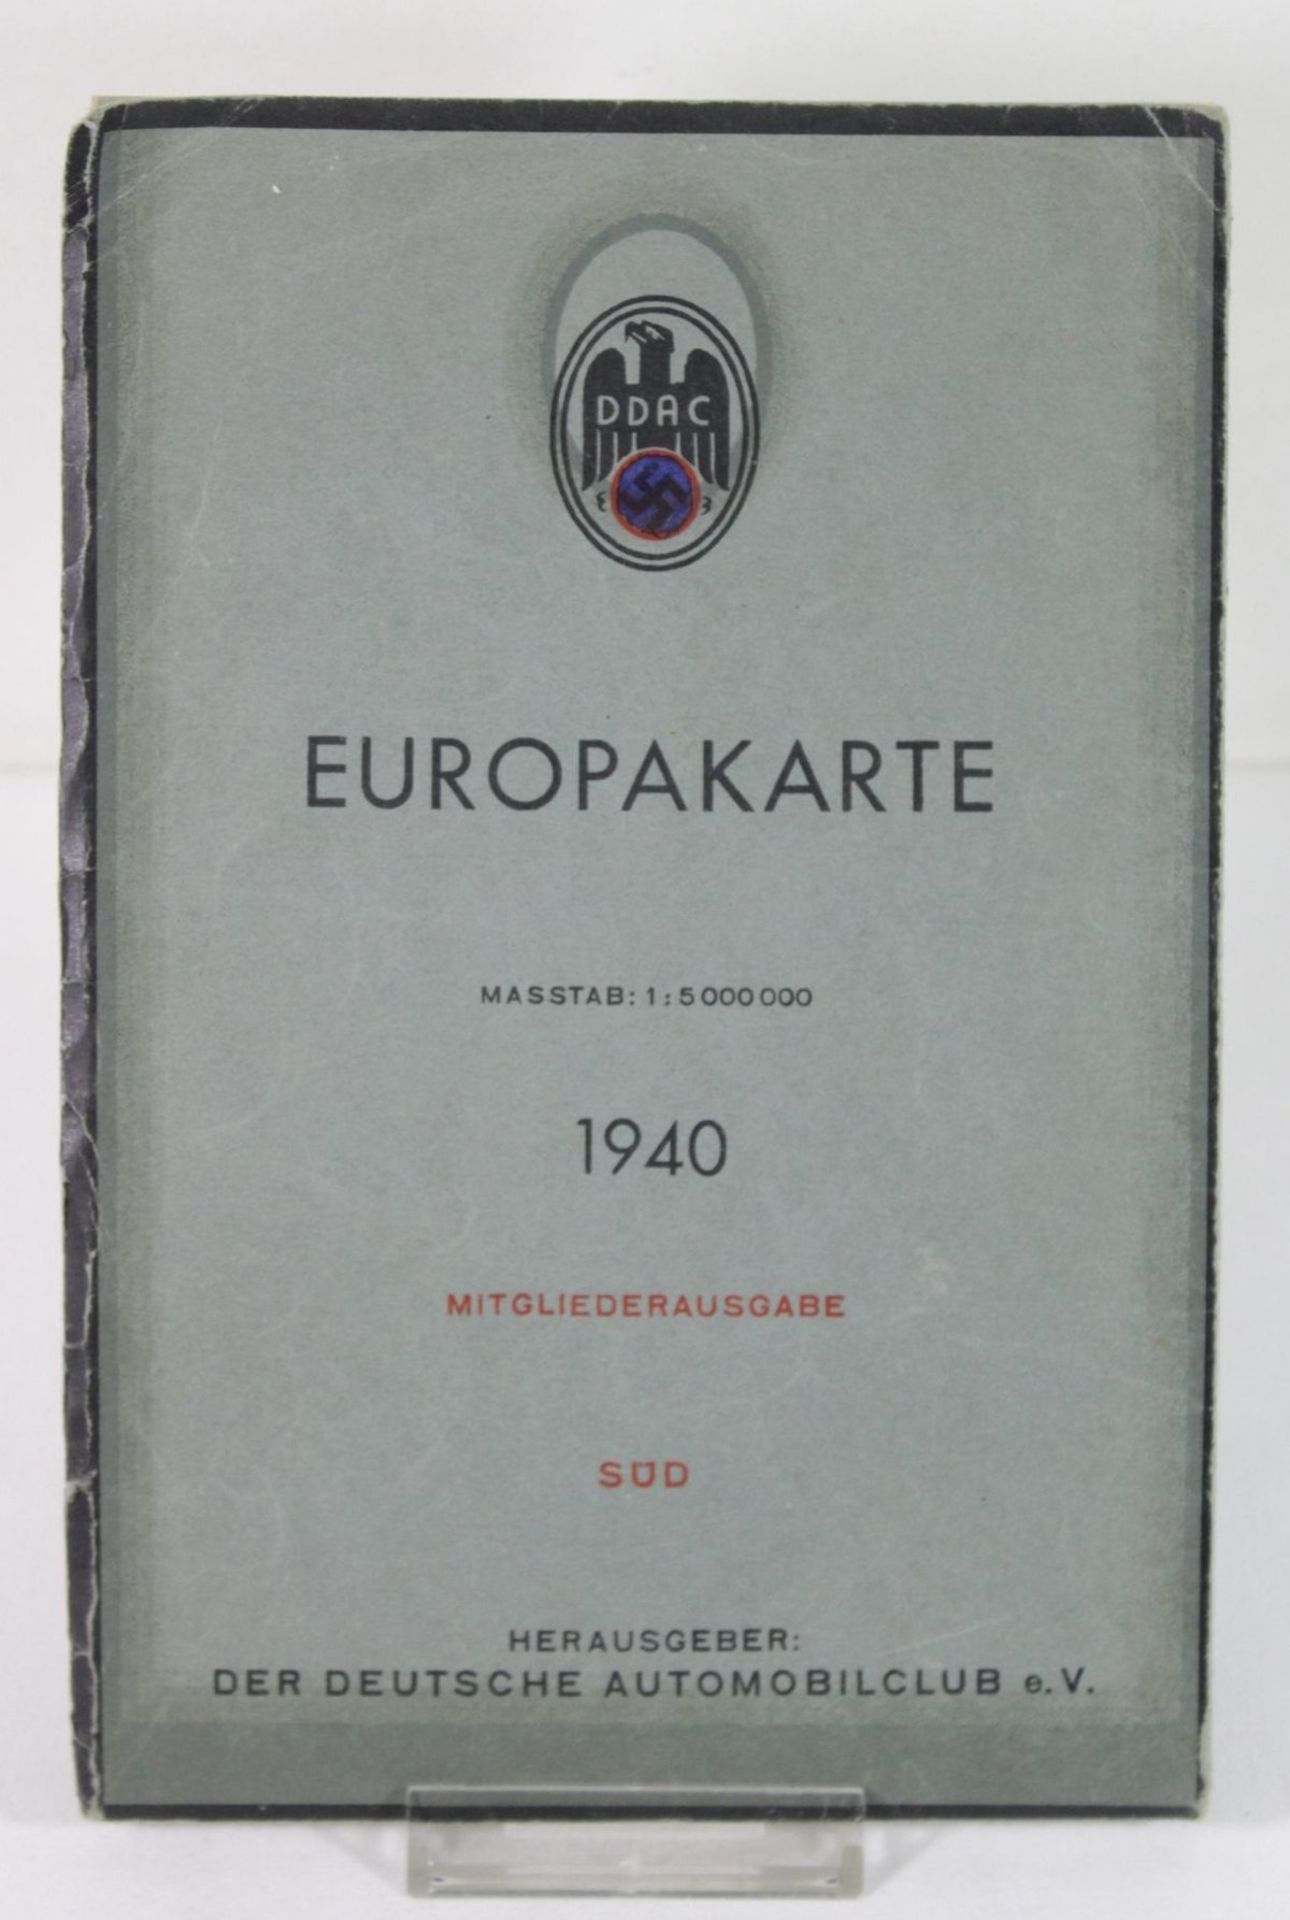 DDAC - Europakarte, 1940. - Image 2 of 3